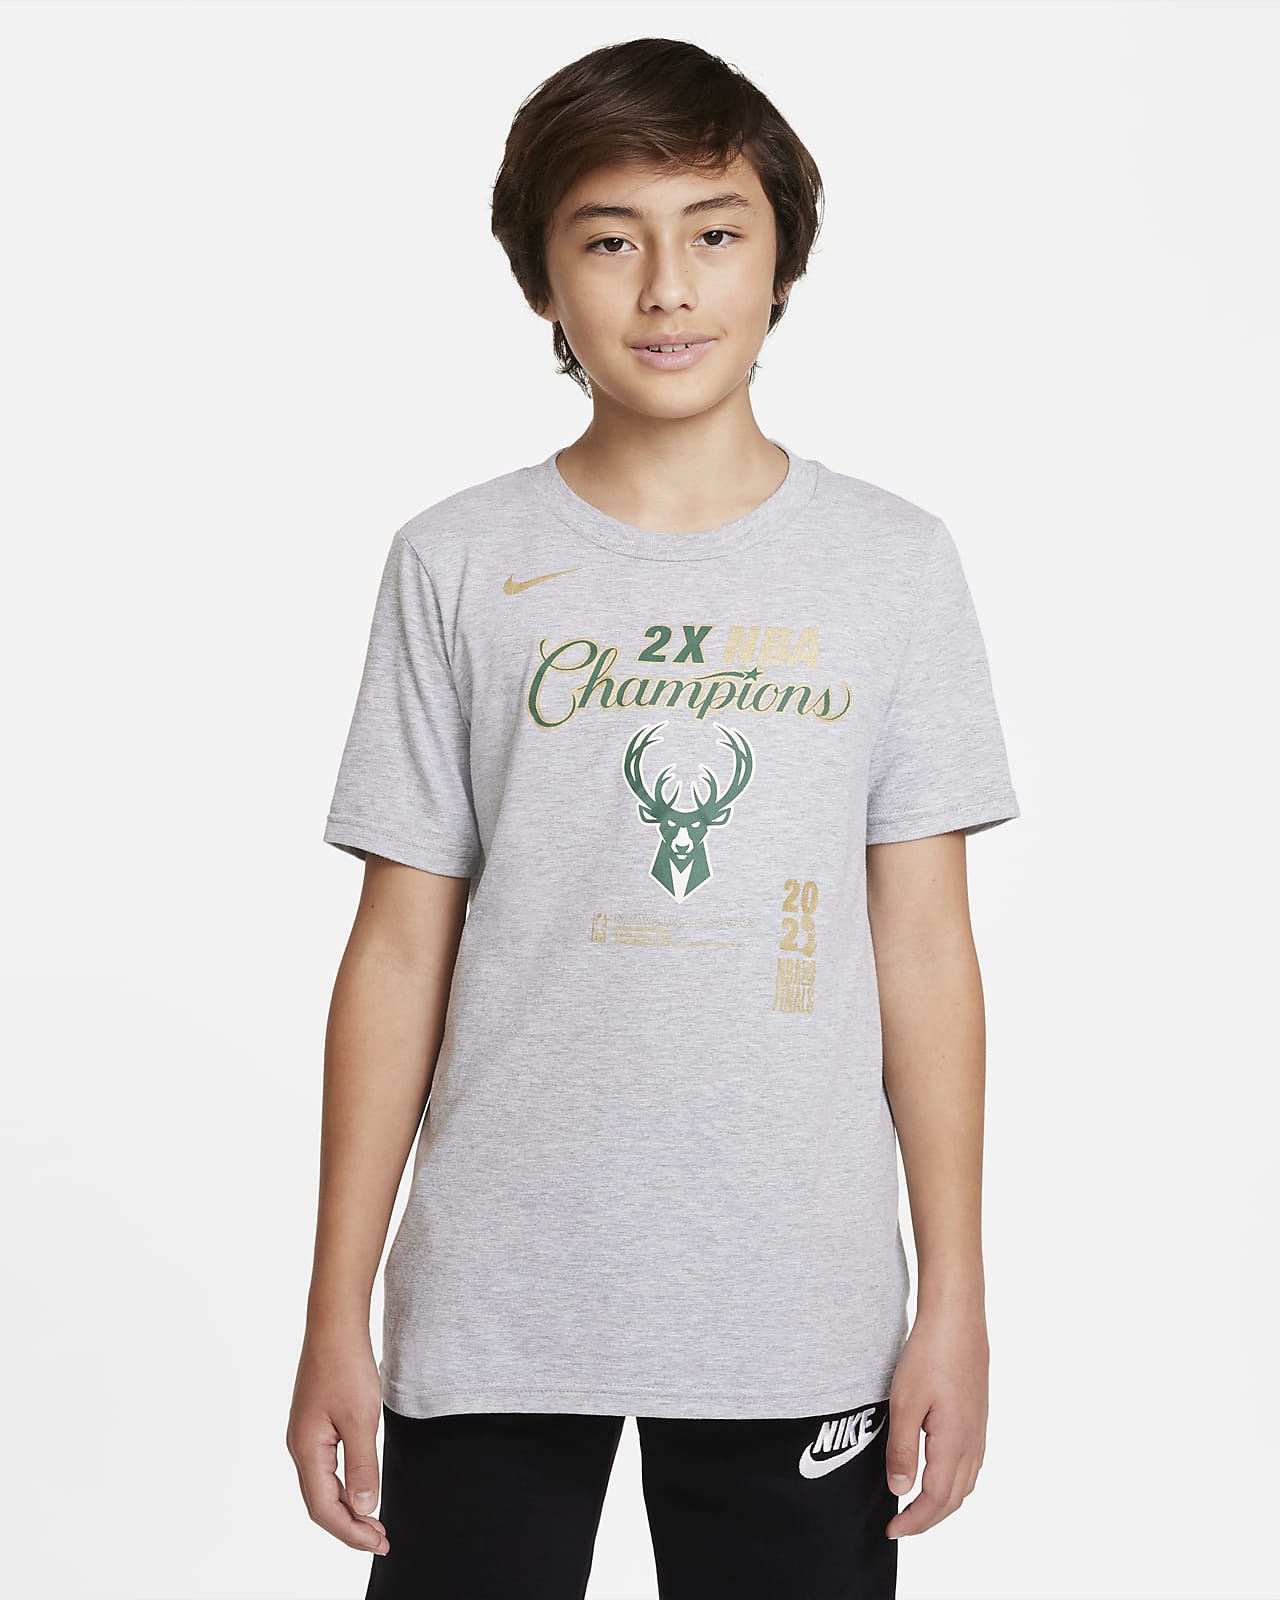 T-Shirt Nike NBA Μιλγουόκι Μπακς για μεγάλα παιδιά